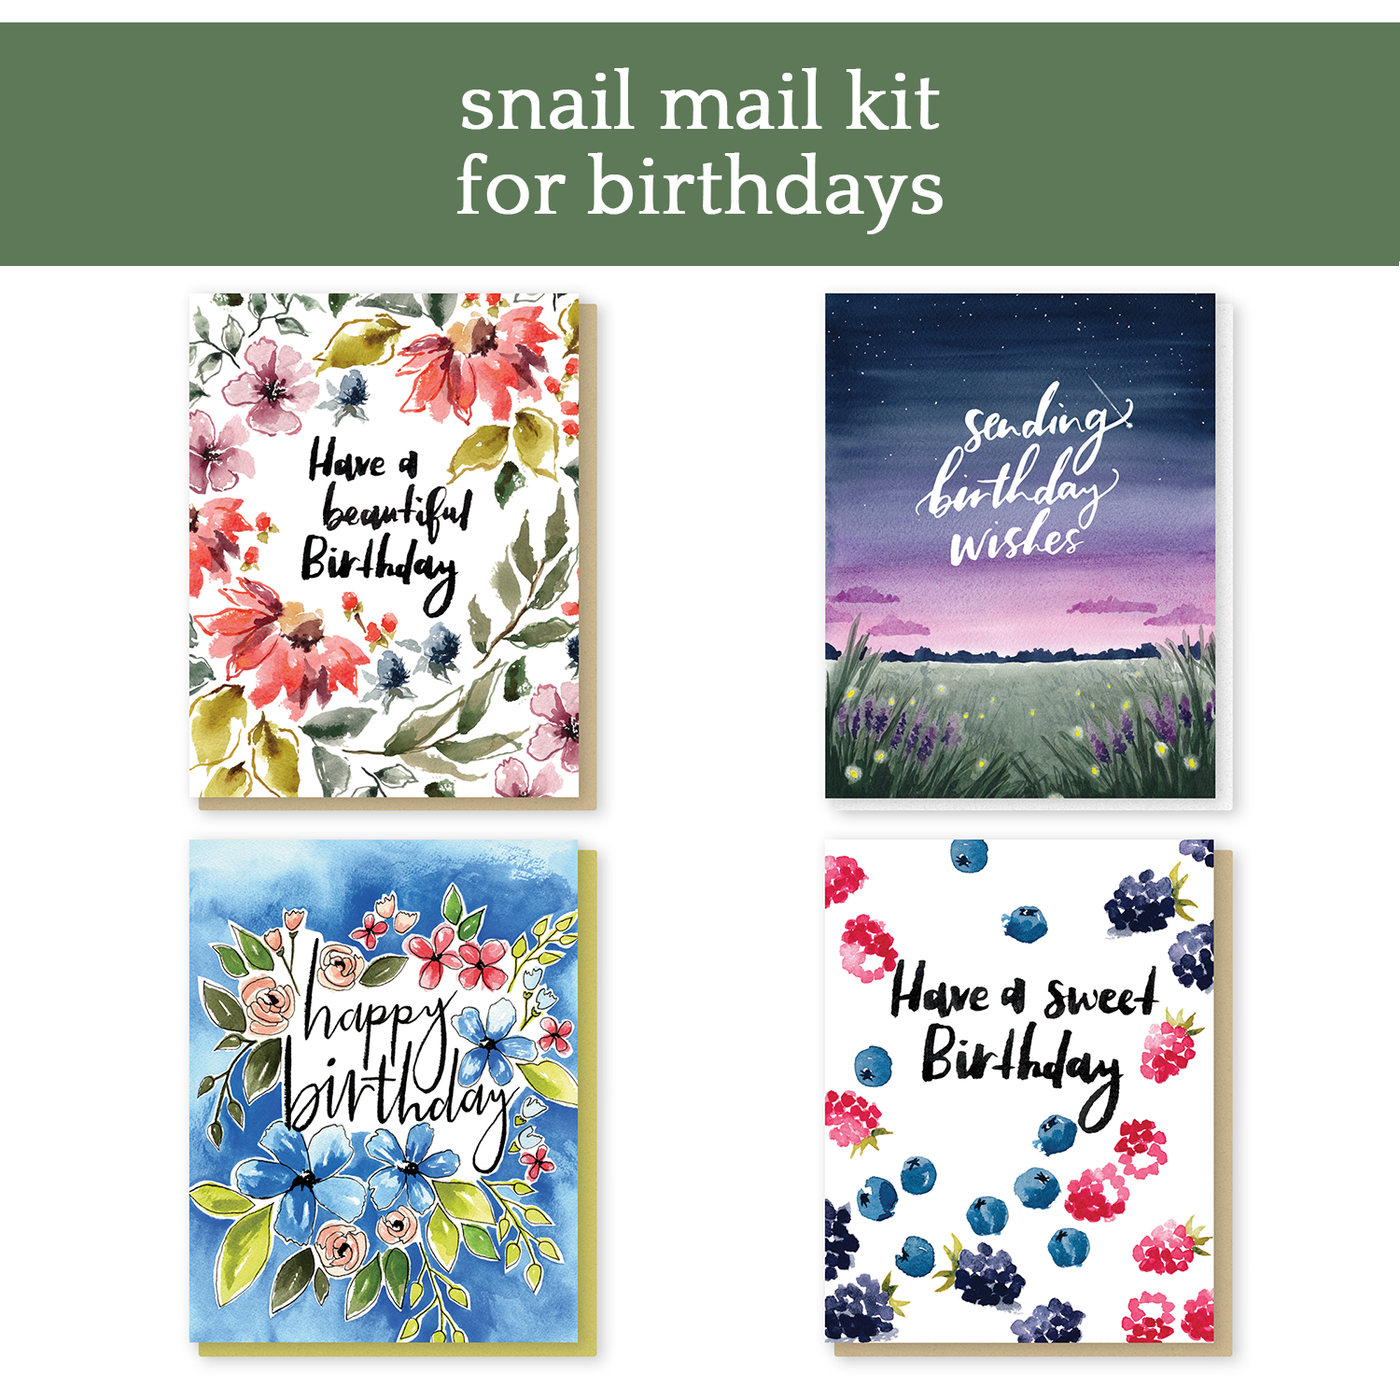 snail mail kit for birthdays